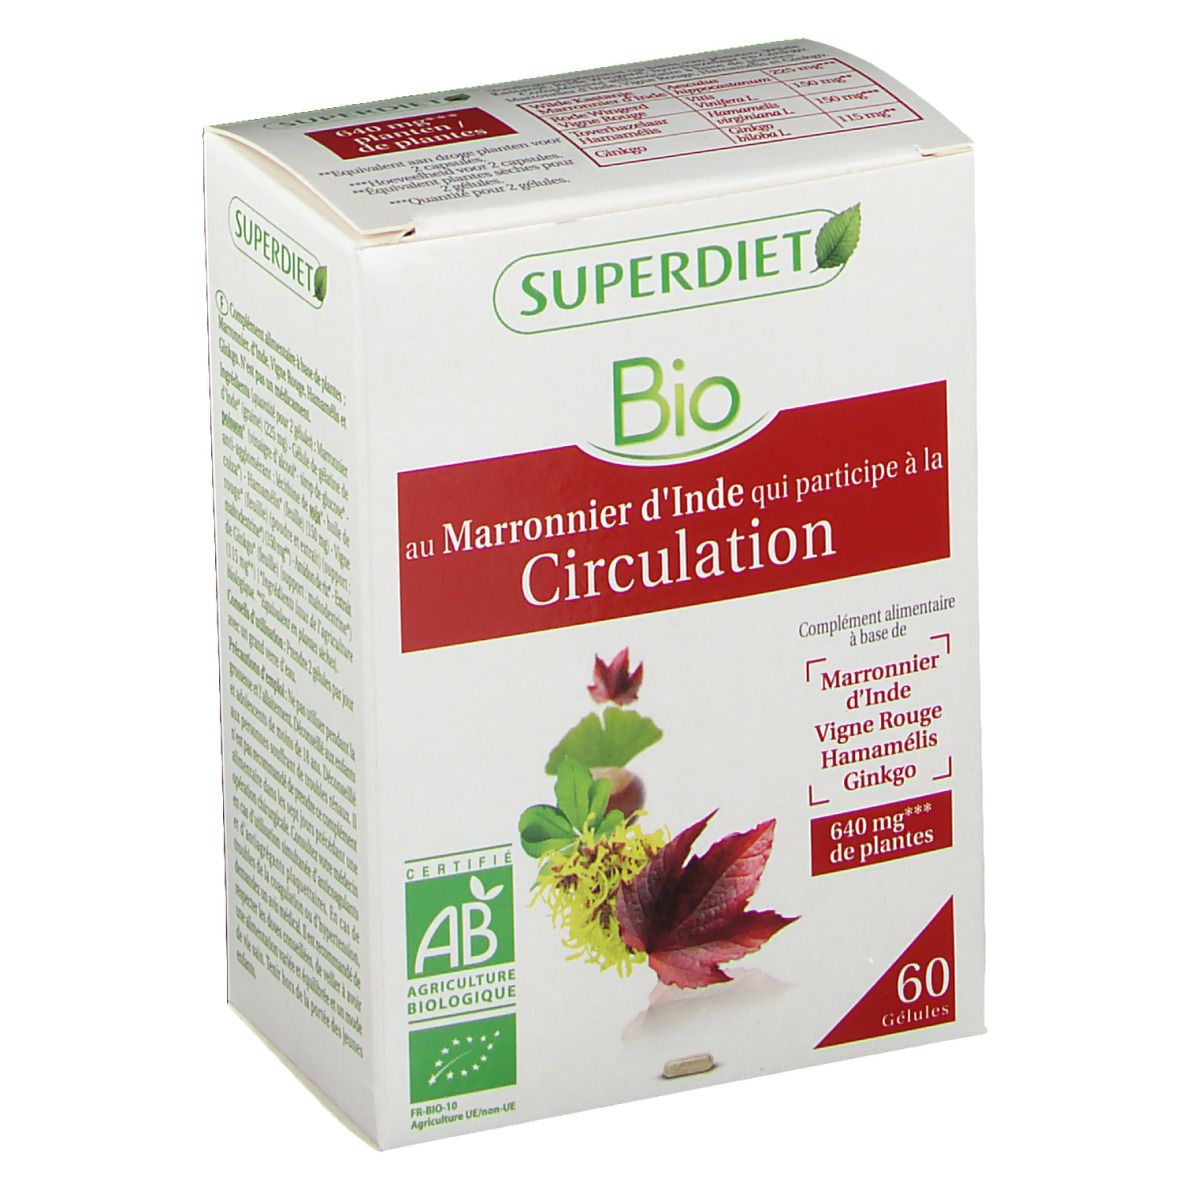 Super Diet Complexe Marronnier d'Inde Circulation Bio